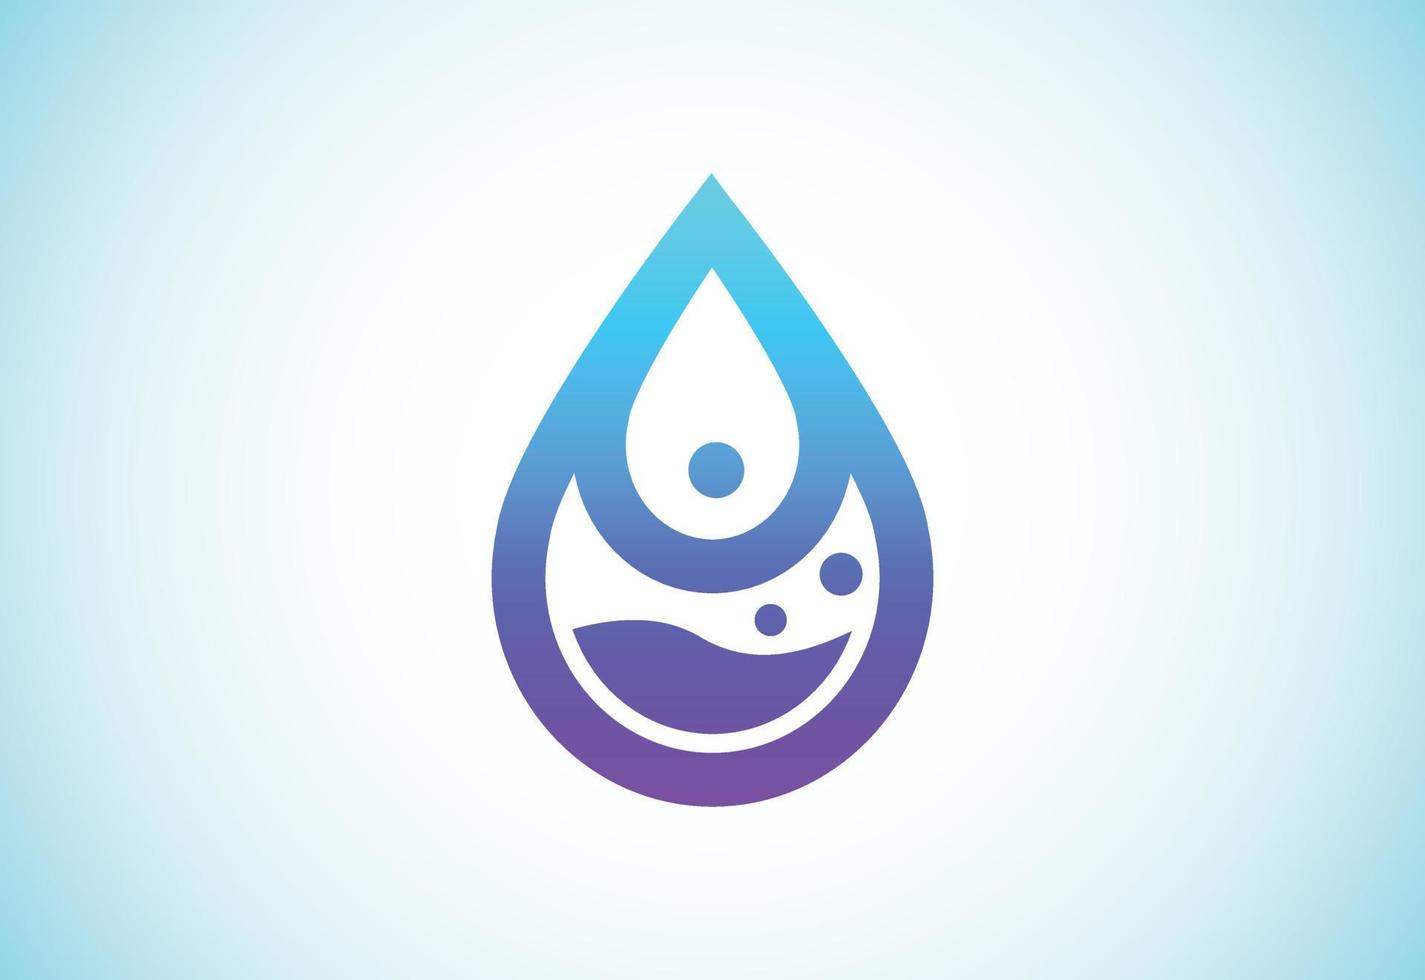 símbolo de signo de logotipo de gota de agua abstracto sobre fondo blanco, plantilla de diseño de logotipo de gota de agua. vector